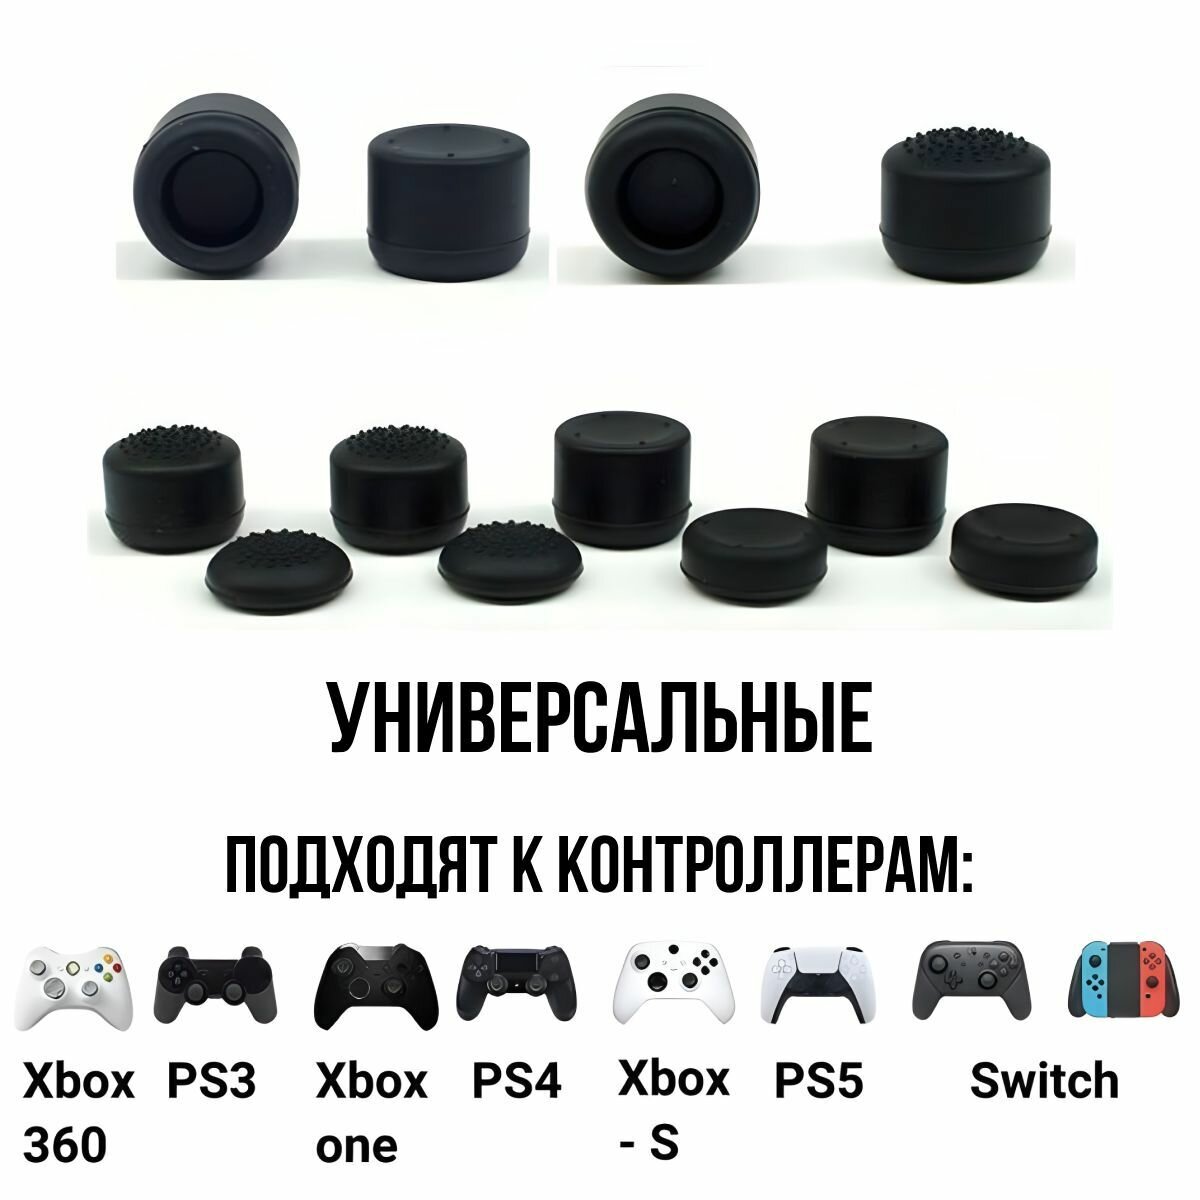 Накладки на стики для геймпада для PS3, PS4, PS5, XBOX one, 360, series X, Switch Pro / пс3 пс4 пс5 икс бокс one, серия 8 штук